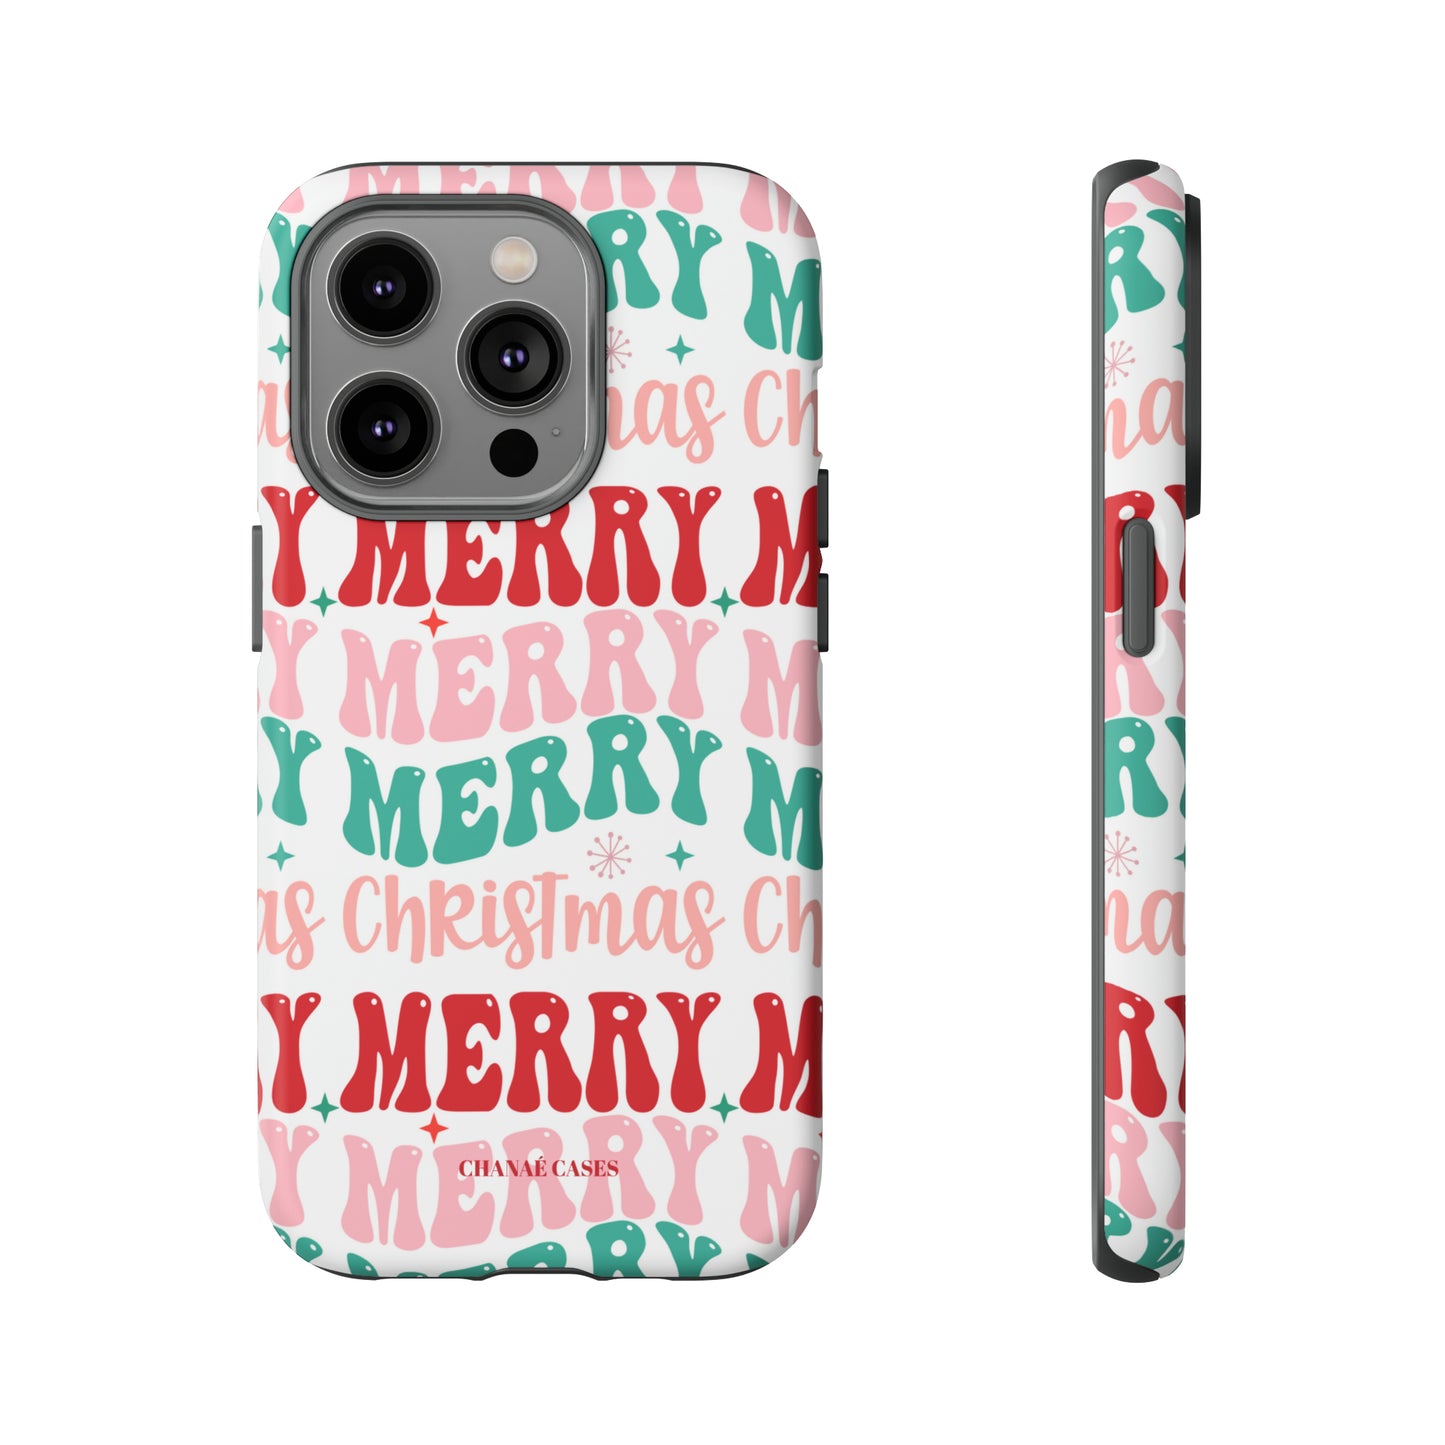 Merry Merry Christmas iPhone "Tough" Case